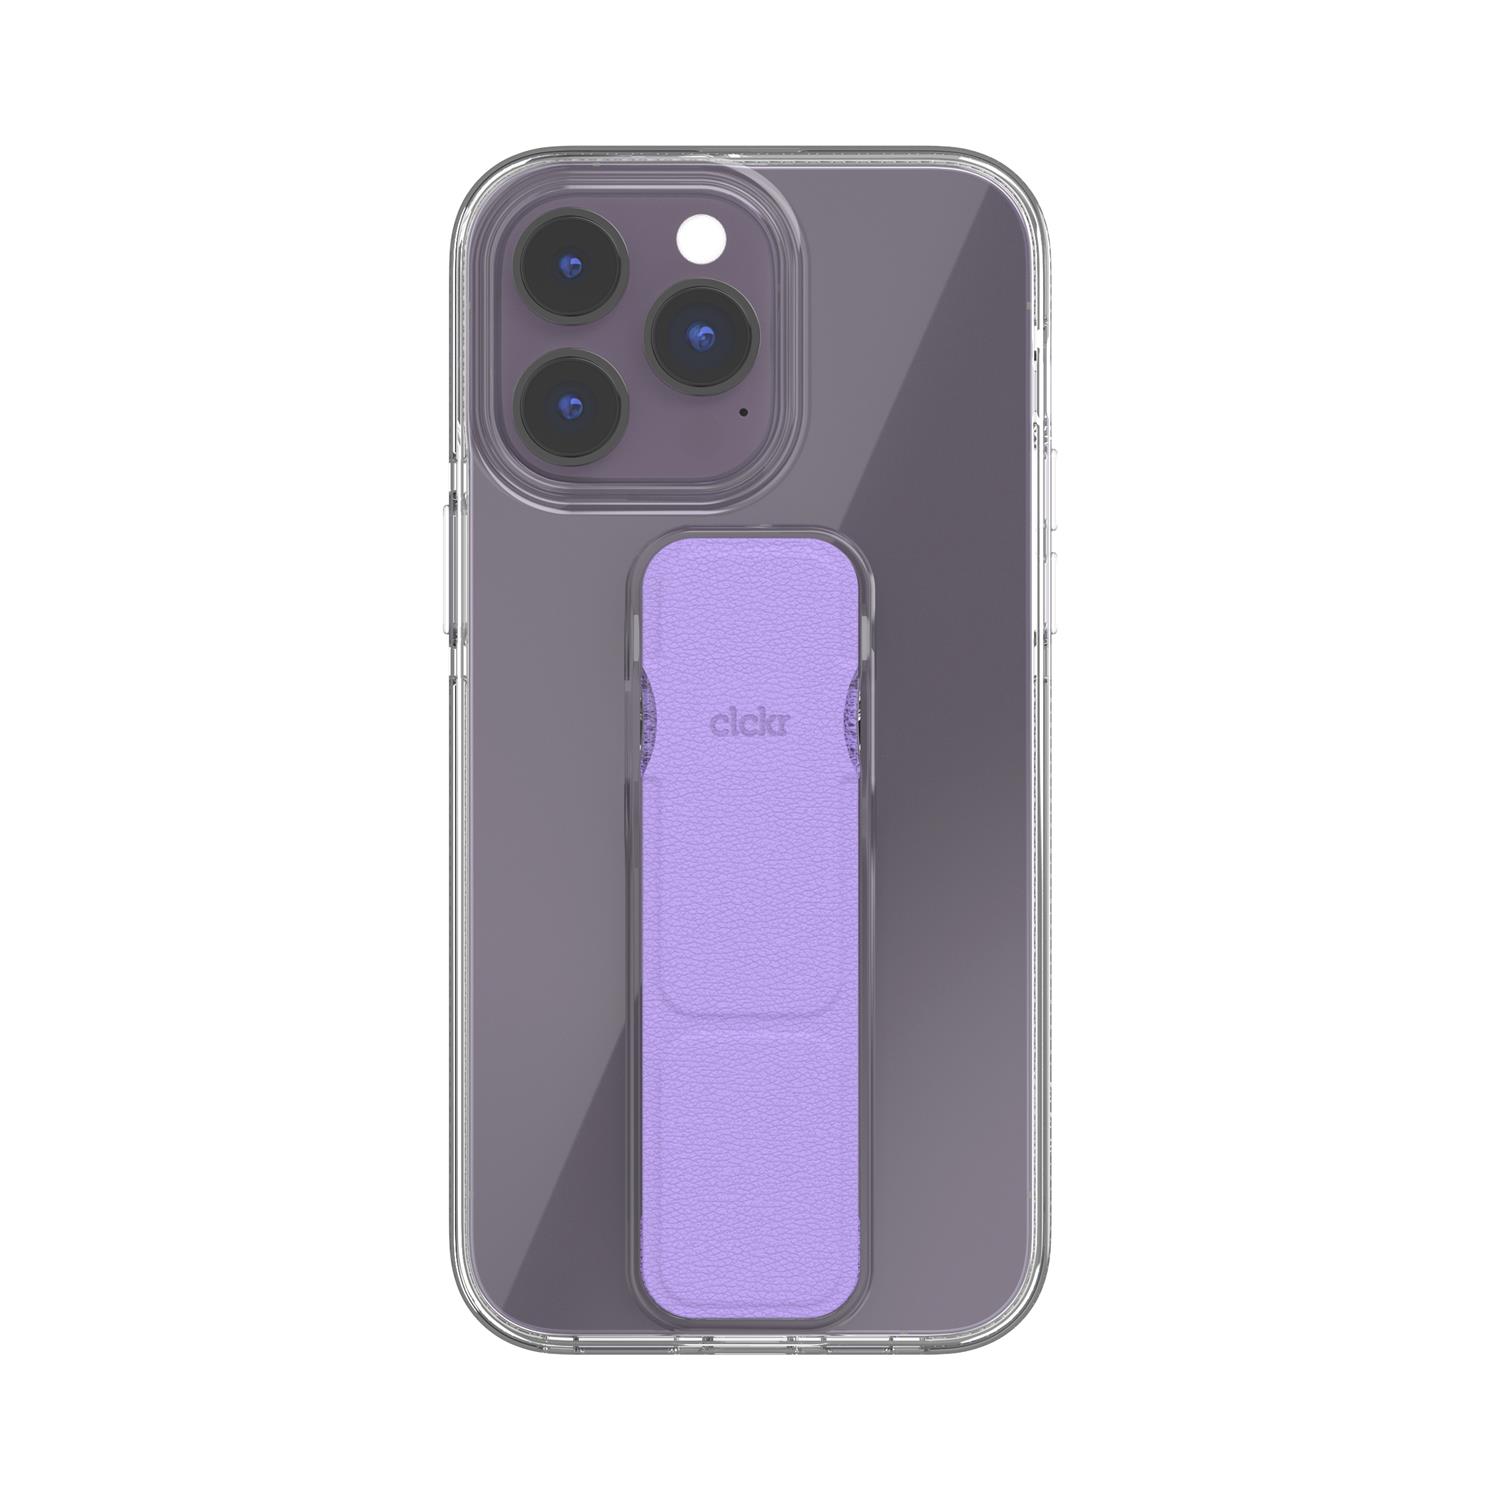 CLCKR Gripcase Clear für iPhone 14 Pro Max - clear/purple